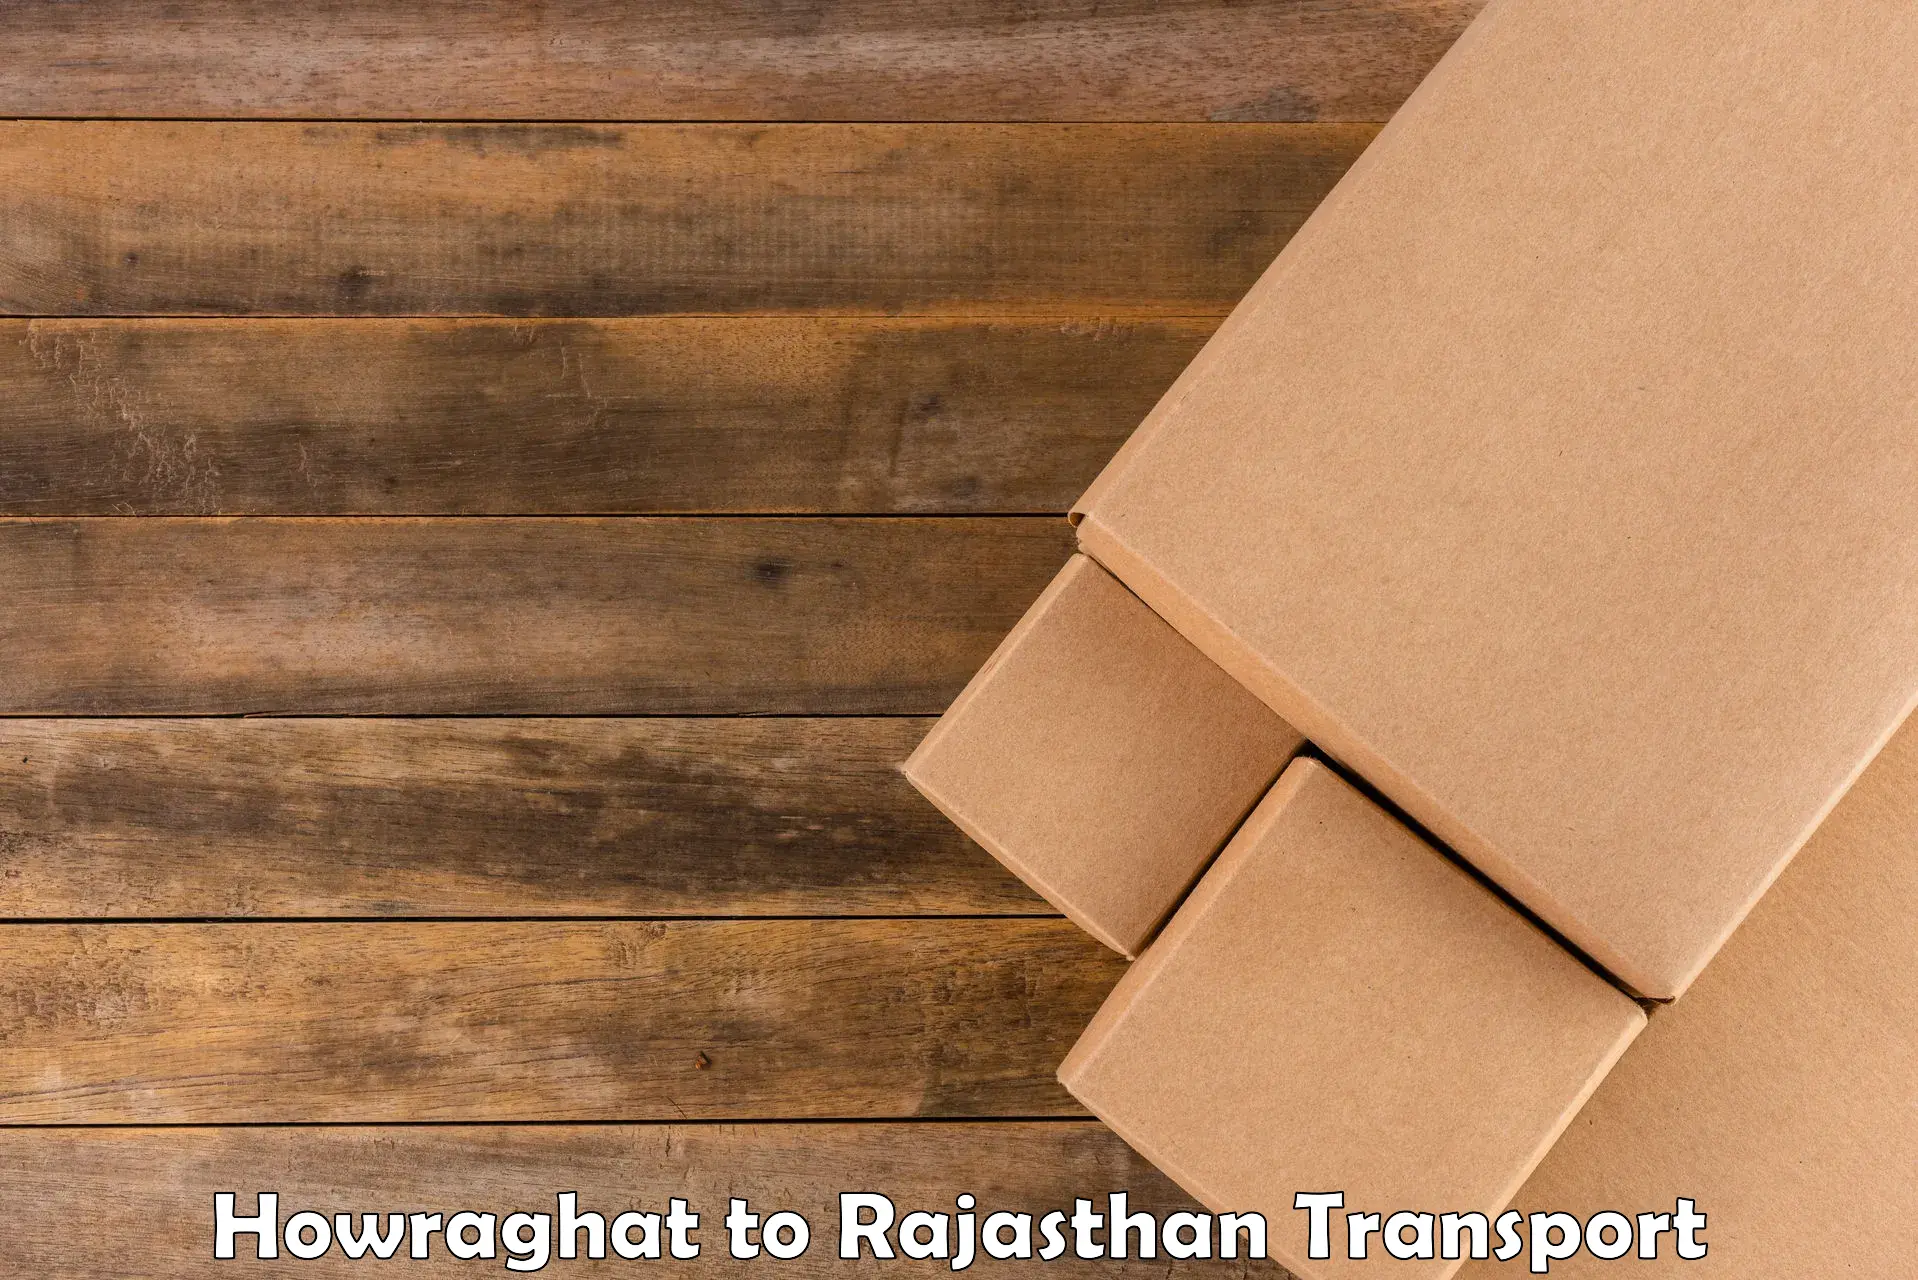 Delivery service Howraghat to Sagwara